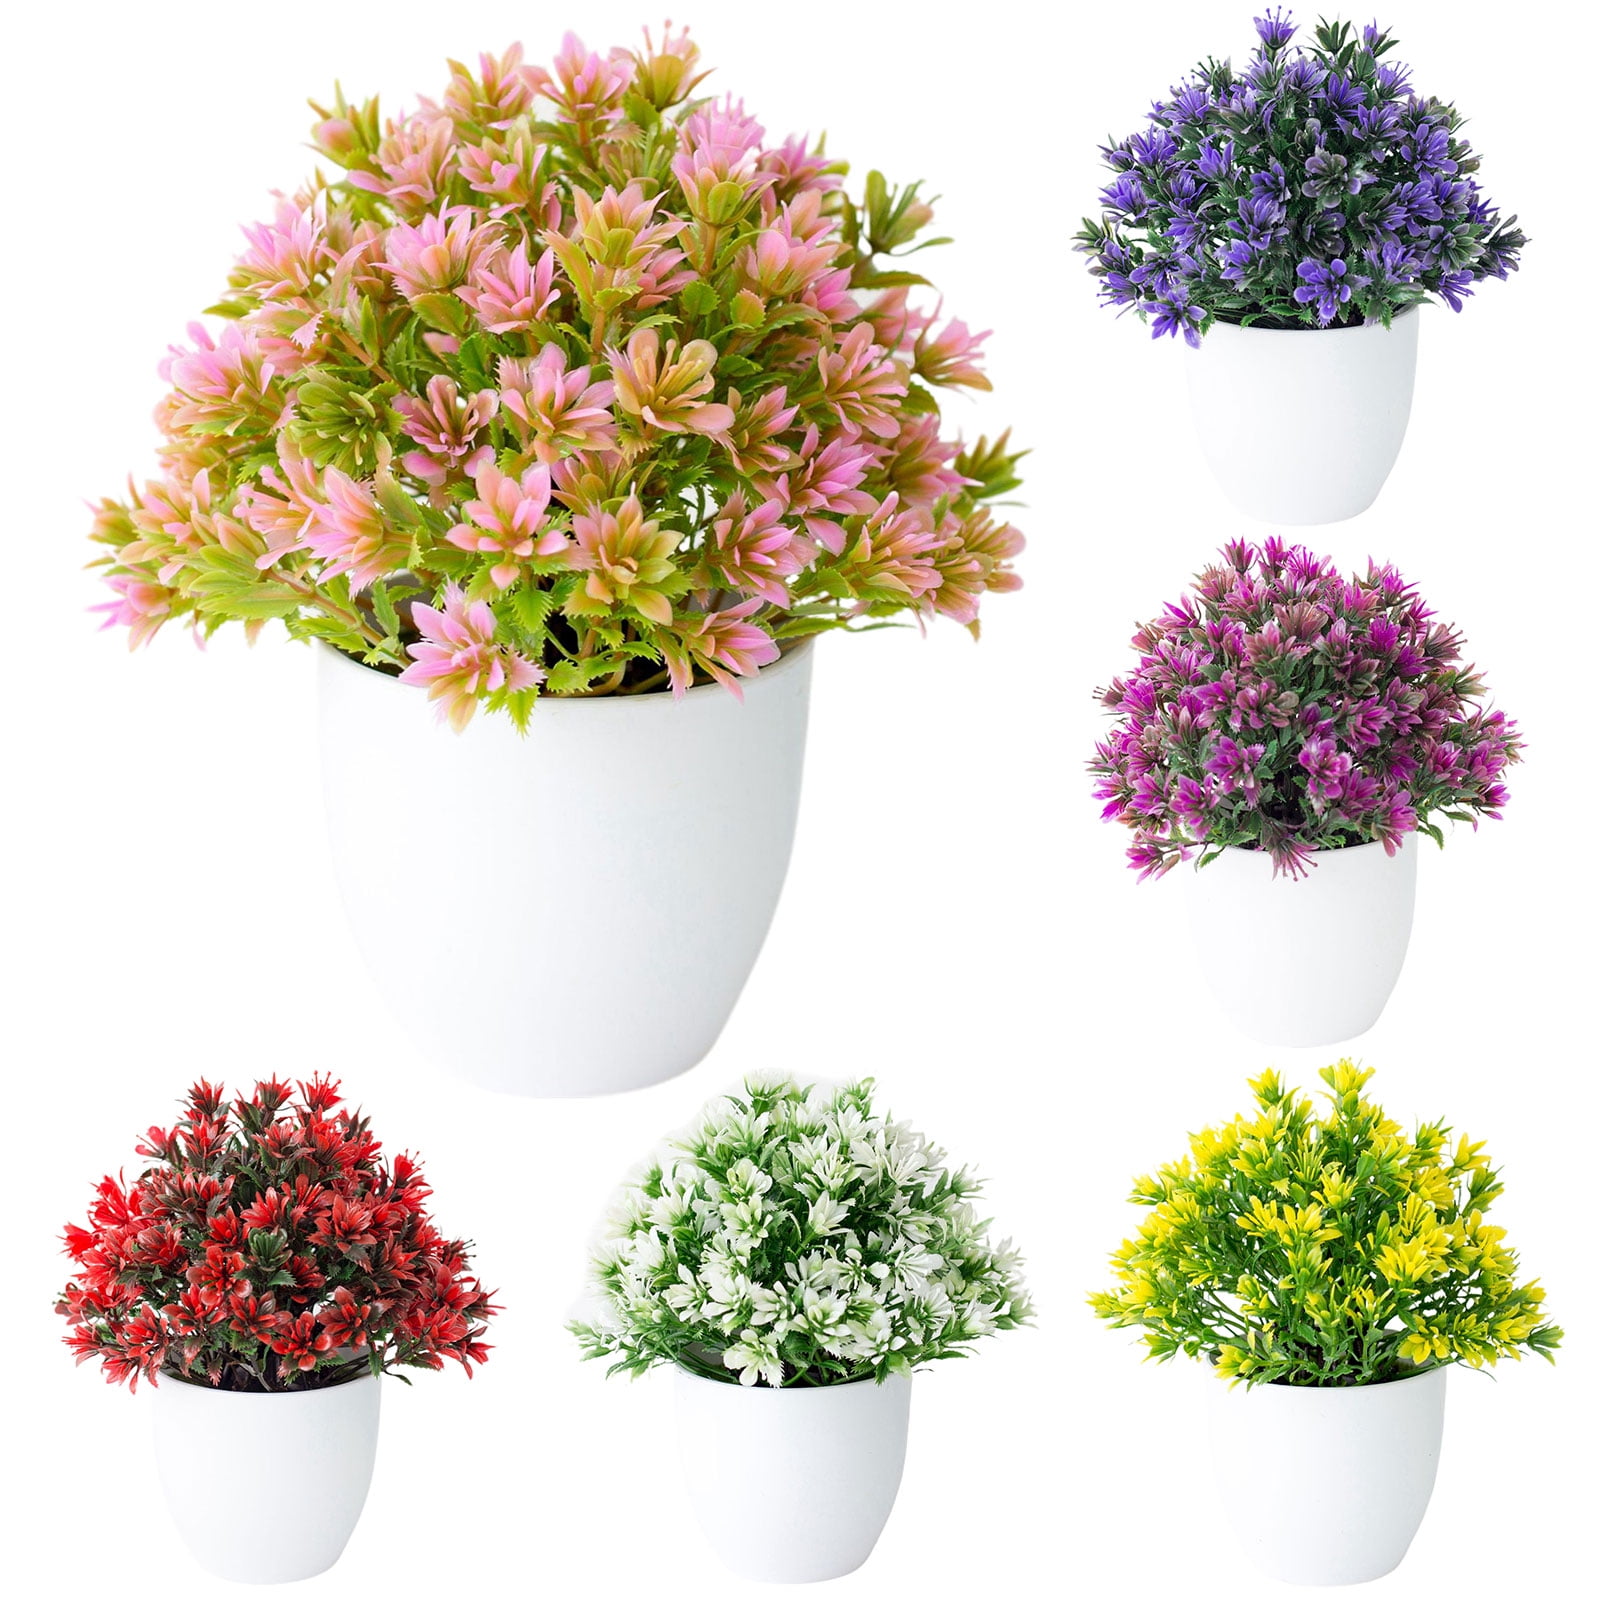 Details about  / 4-In White Decorative Ceramic Guanyin Multi-Face Succulent Flower Planter Vase